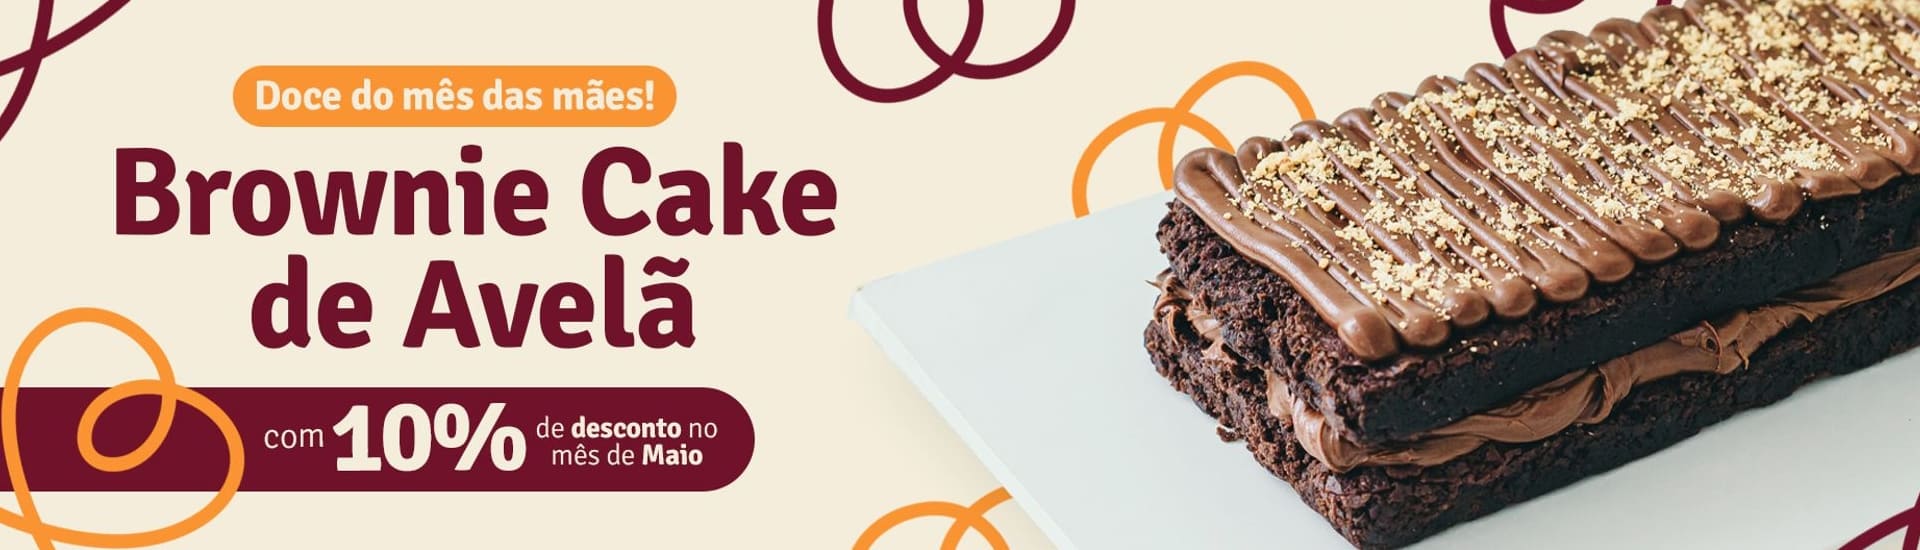 Banner doce do mês - Brownie Cake de Avelã